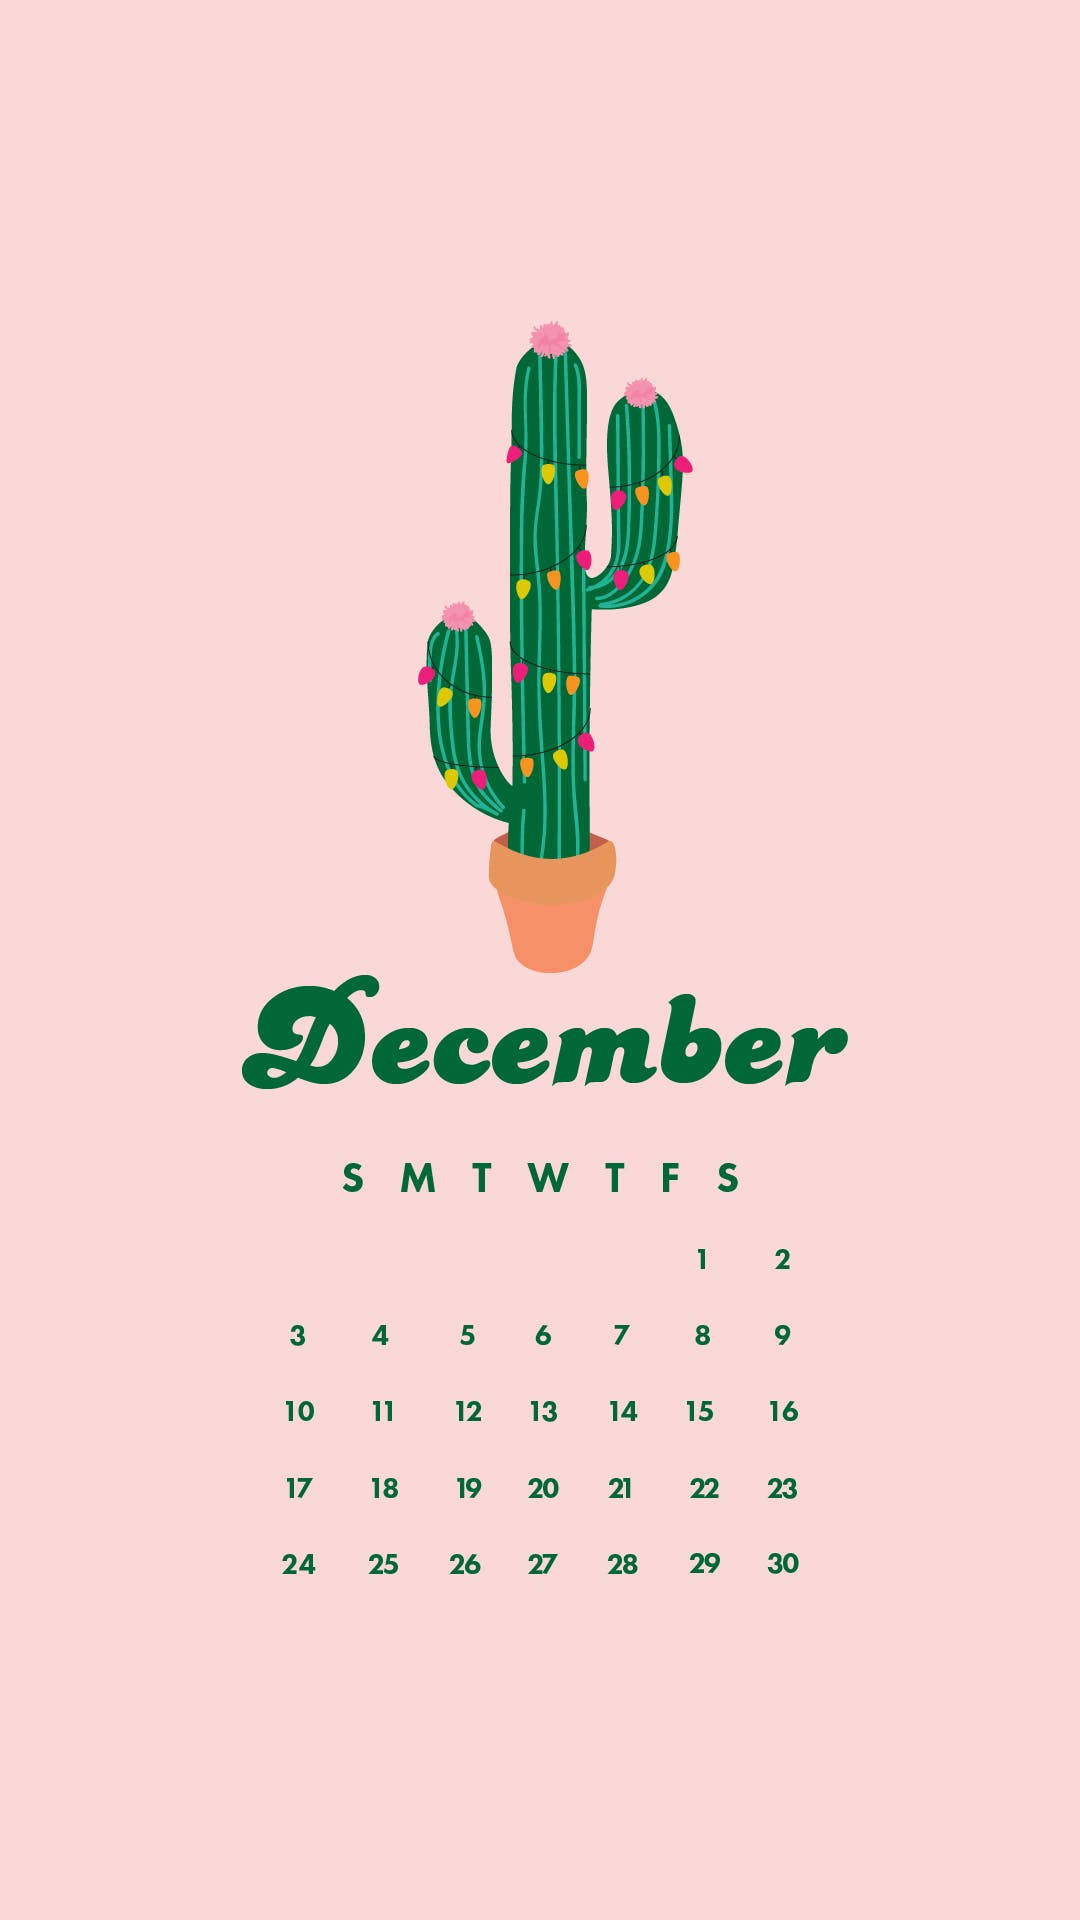 December Cactus Calendar Wallpaper